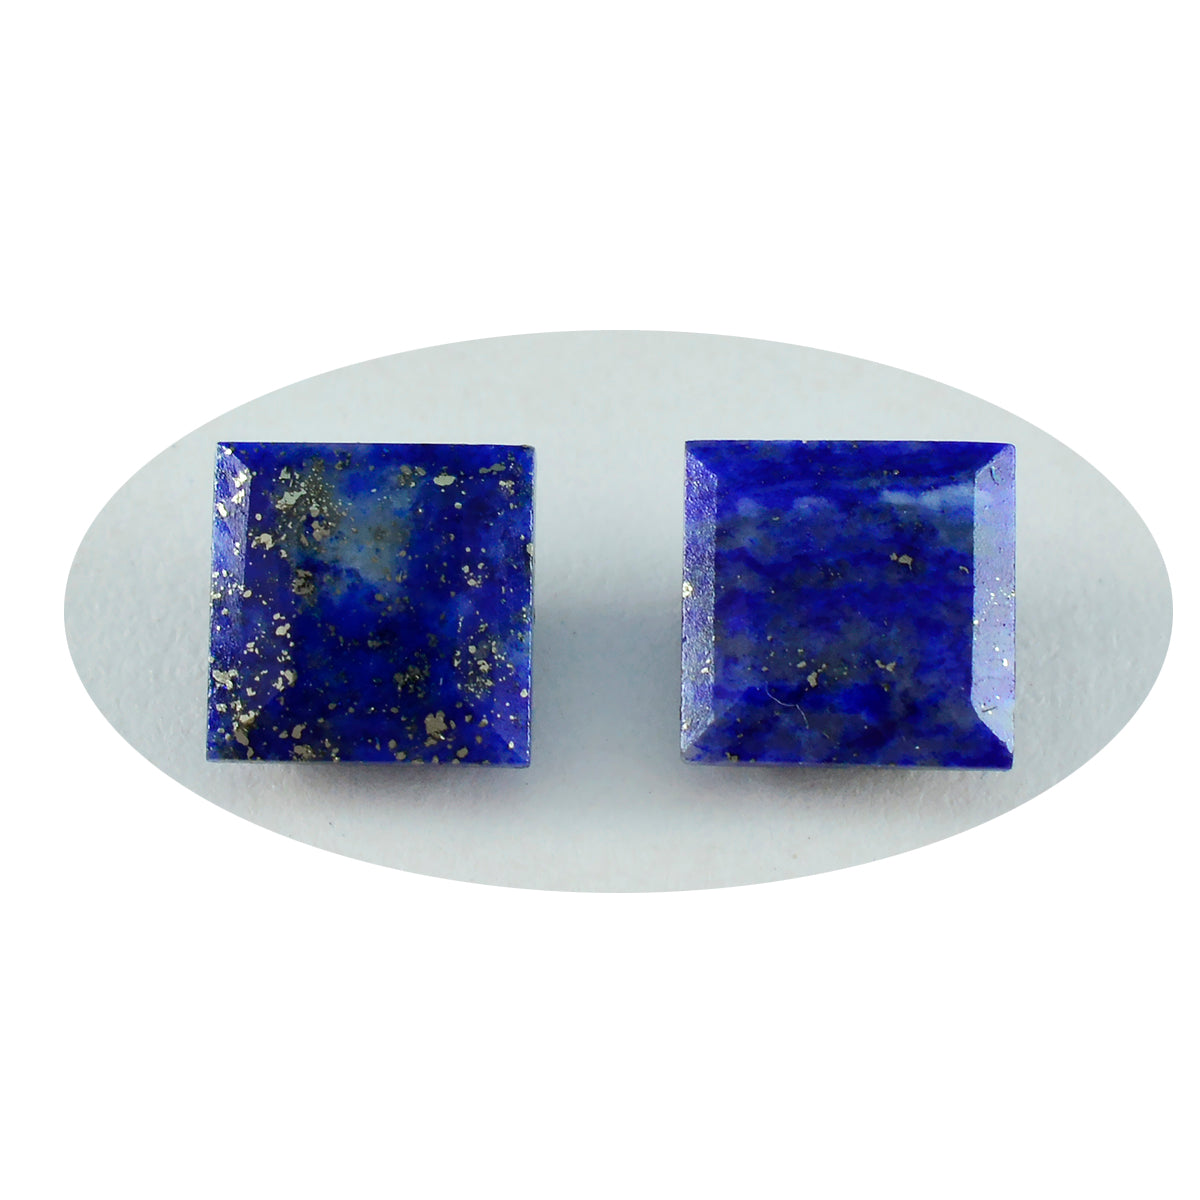 Riyogems 1PC Natuurlijke Blauwe Lapis Lazuli Facet 11x11 mm Vierkante Vorm knappe Kwaliteit Losse Edelstenen